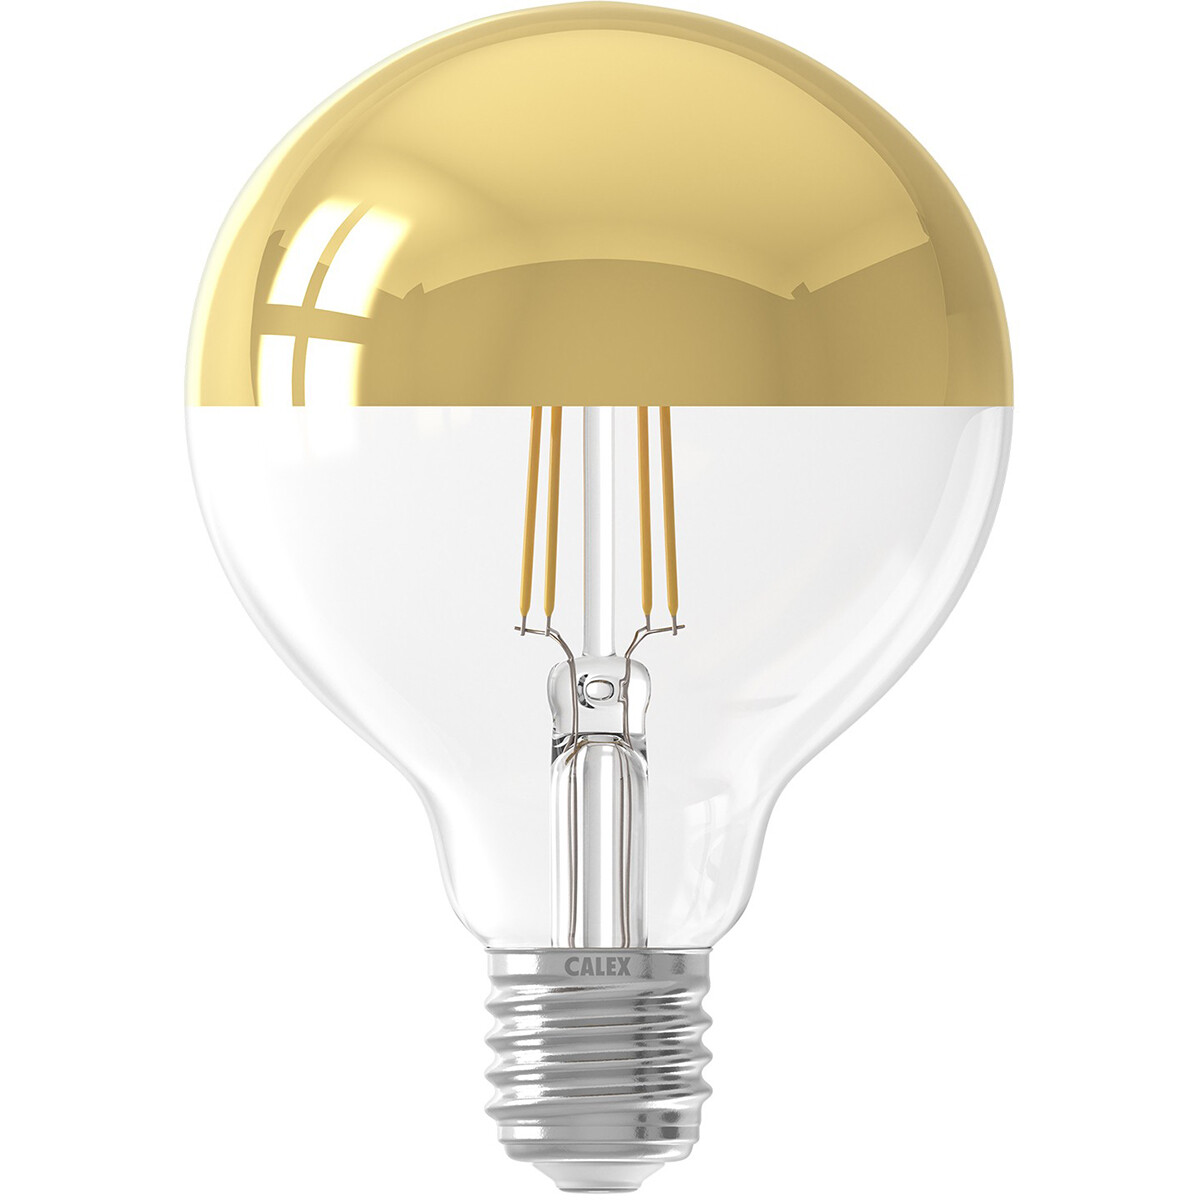 CALEX - LED Lamp - Globe - Filament G95 Kopspiegellamp - E27 Fitting - Dimbaar - 4W - Warm Wit 2300K